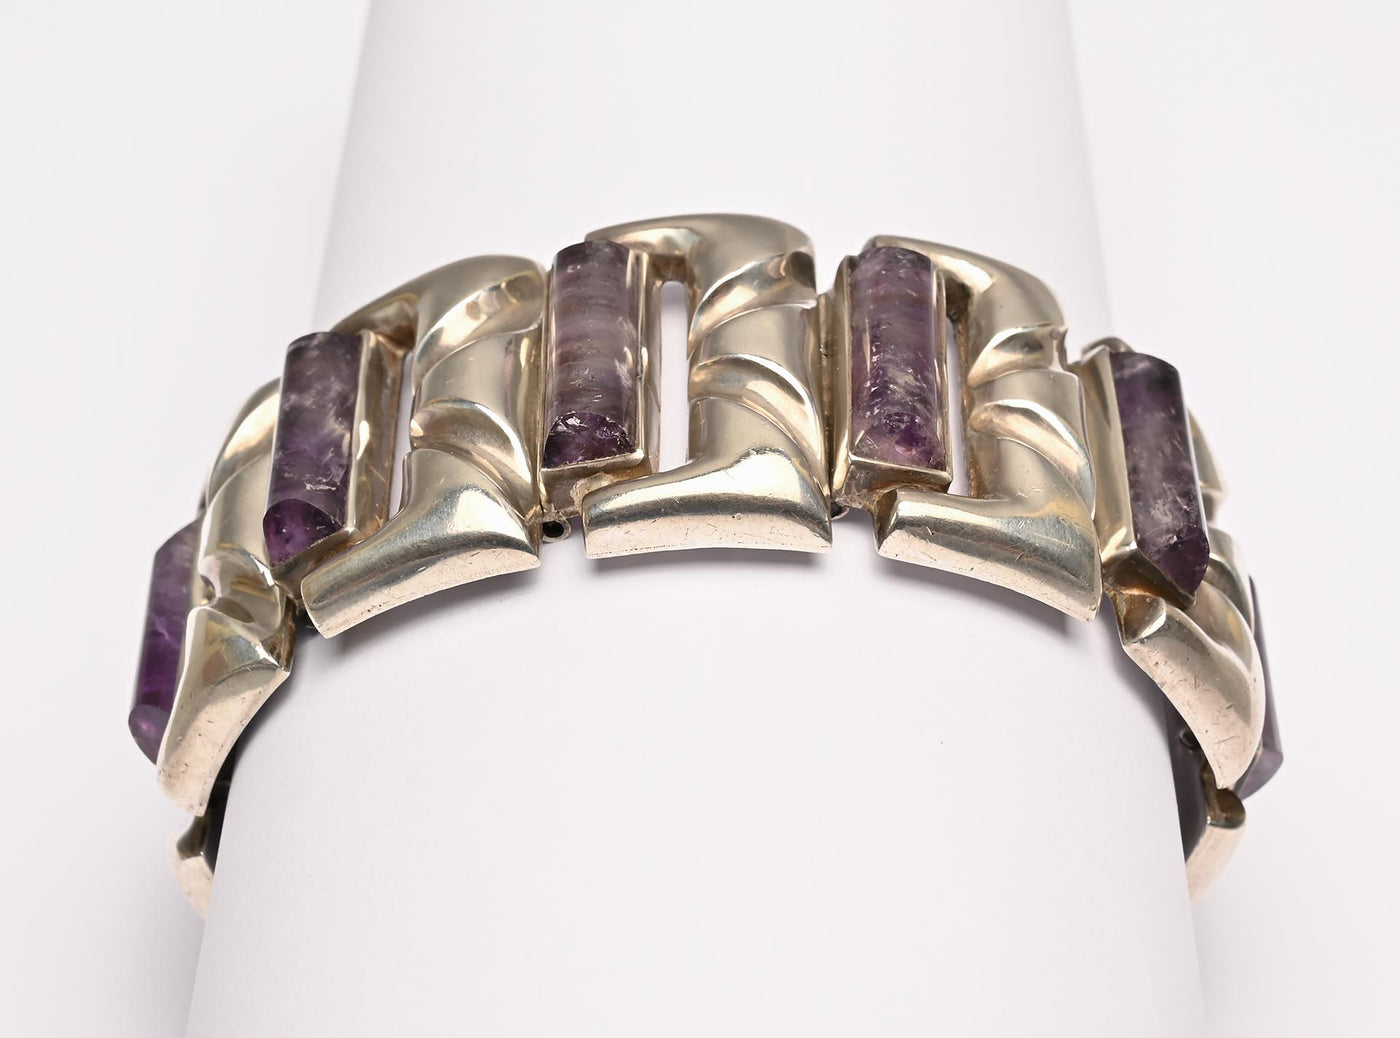 antonio-pineda-sterling-silver-and-amethyst-bracelet-1451527-2